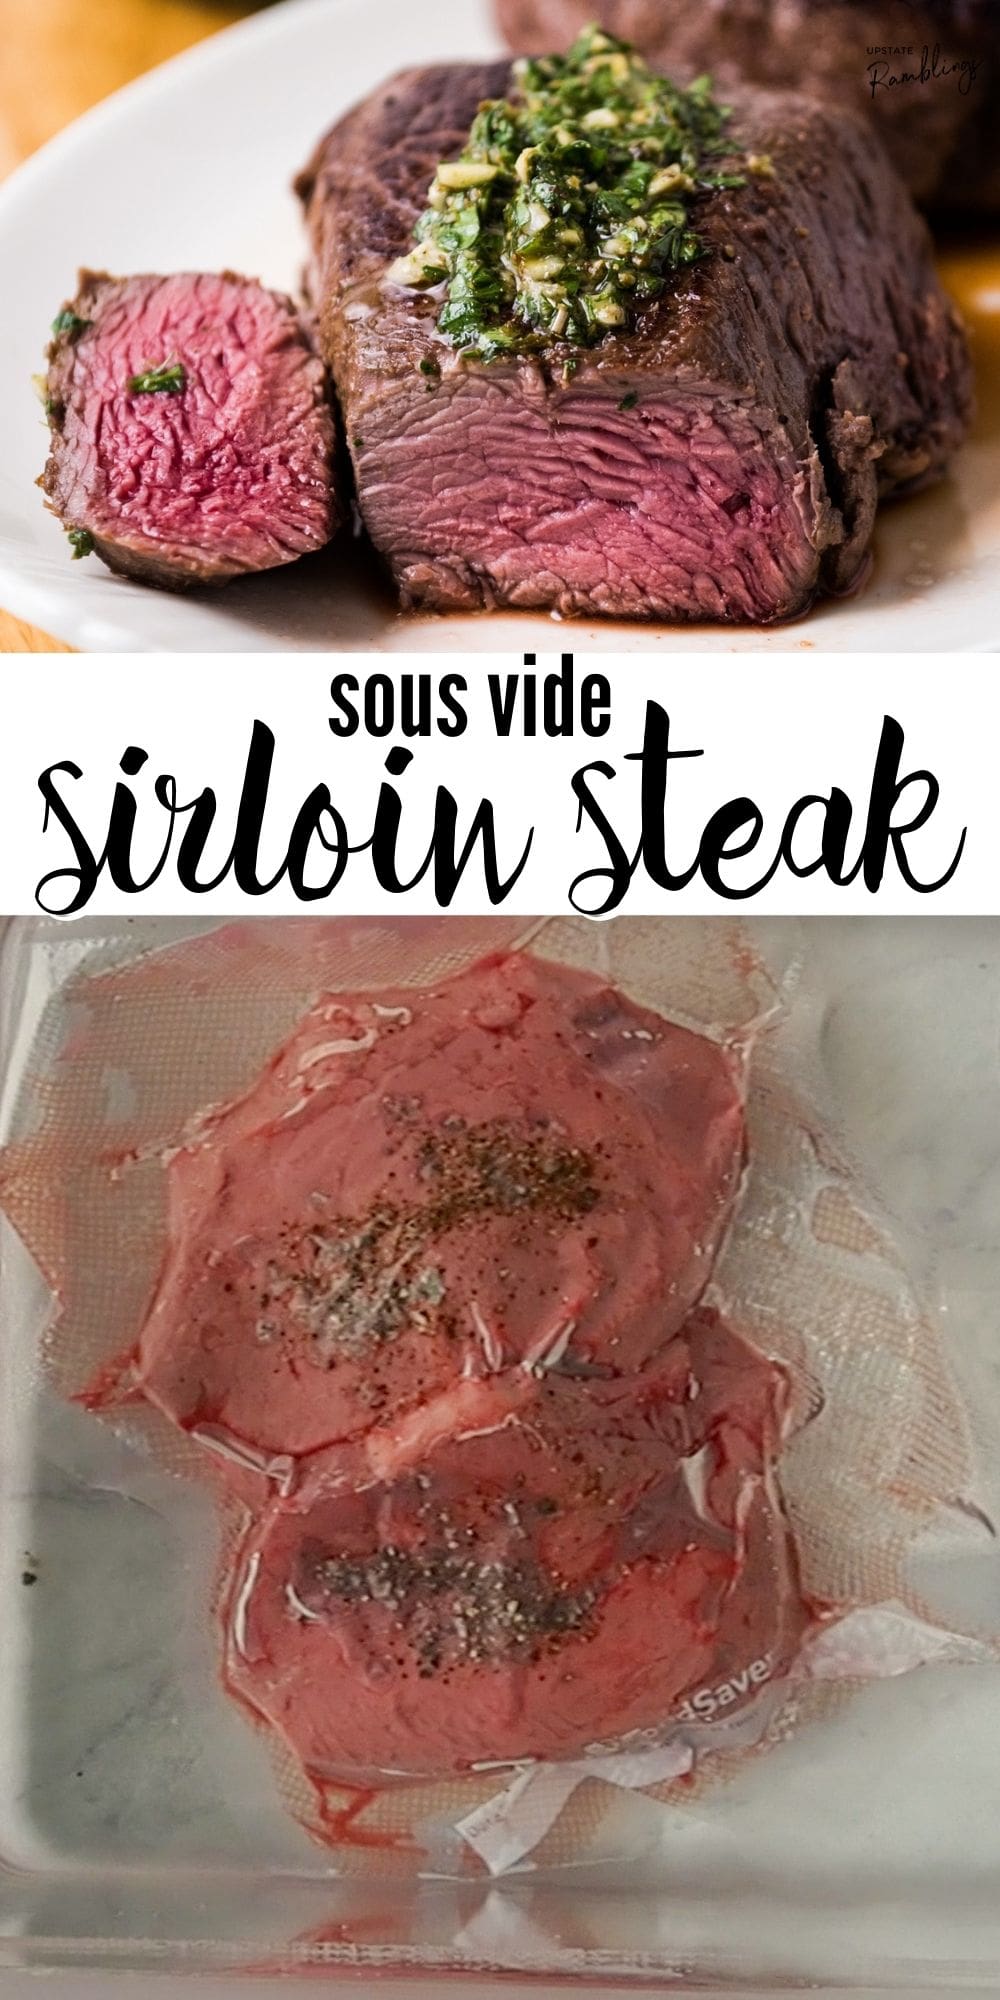 https://www.upstateramblings.com/wp-content/uploads/2021/02/sirloin-steak-long.jpg